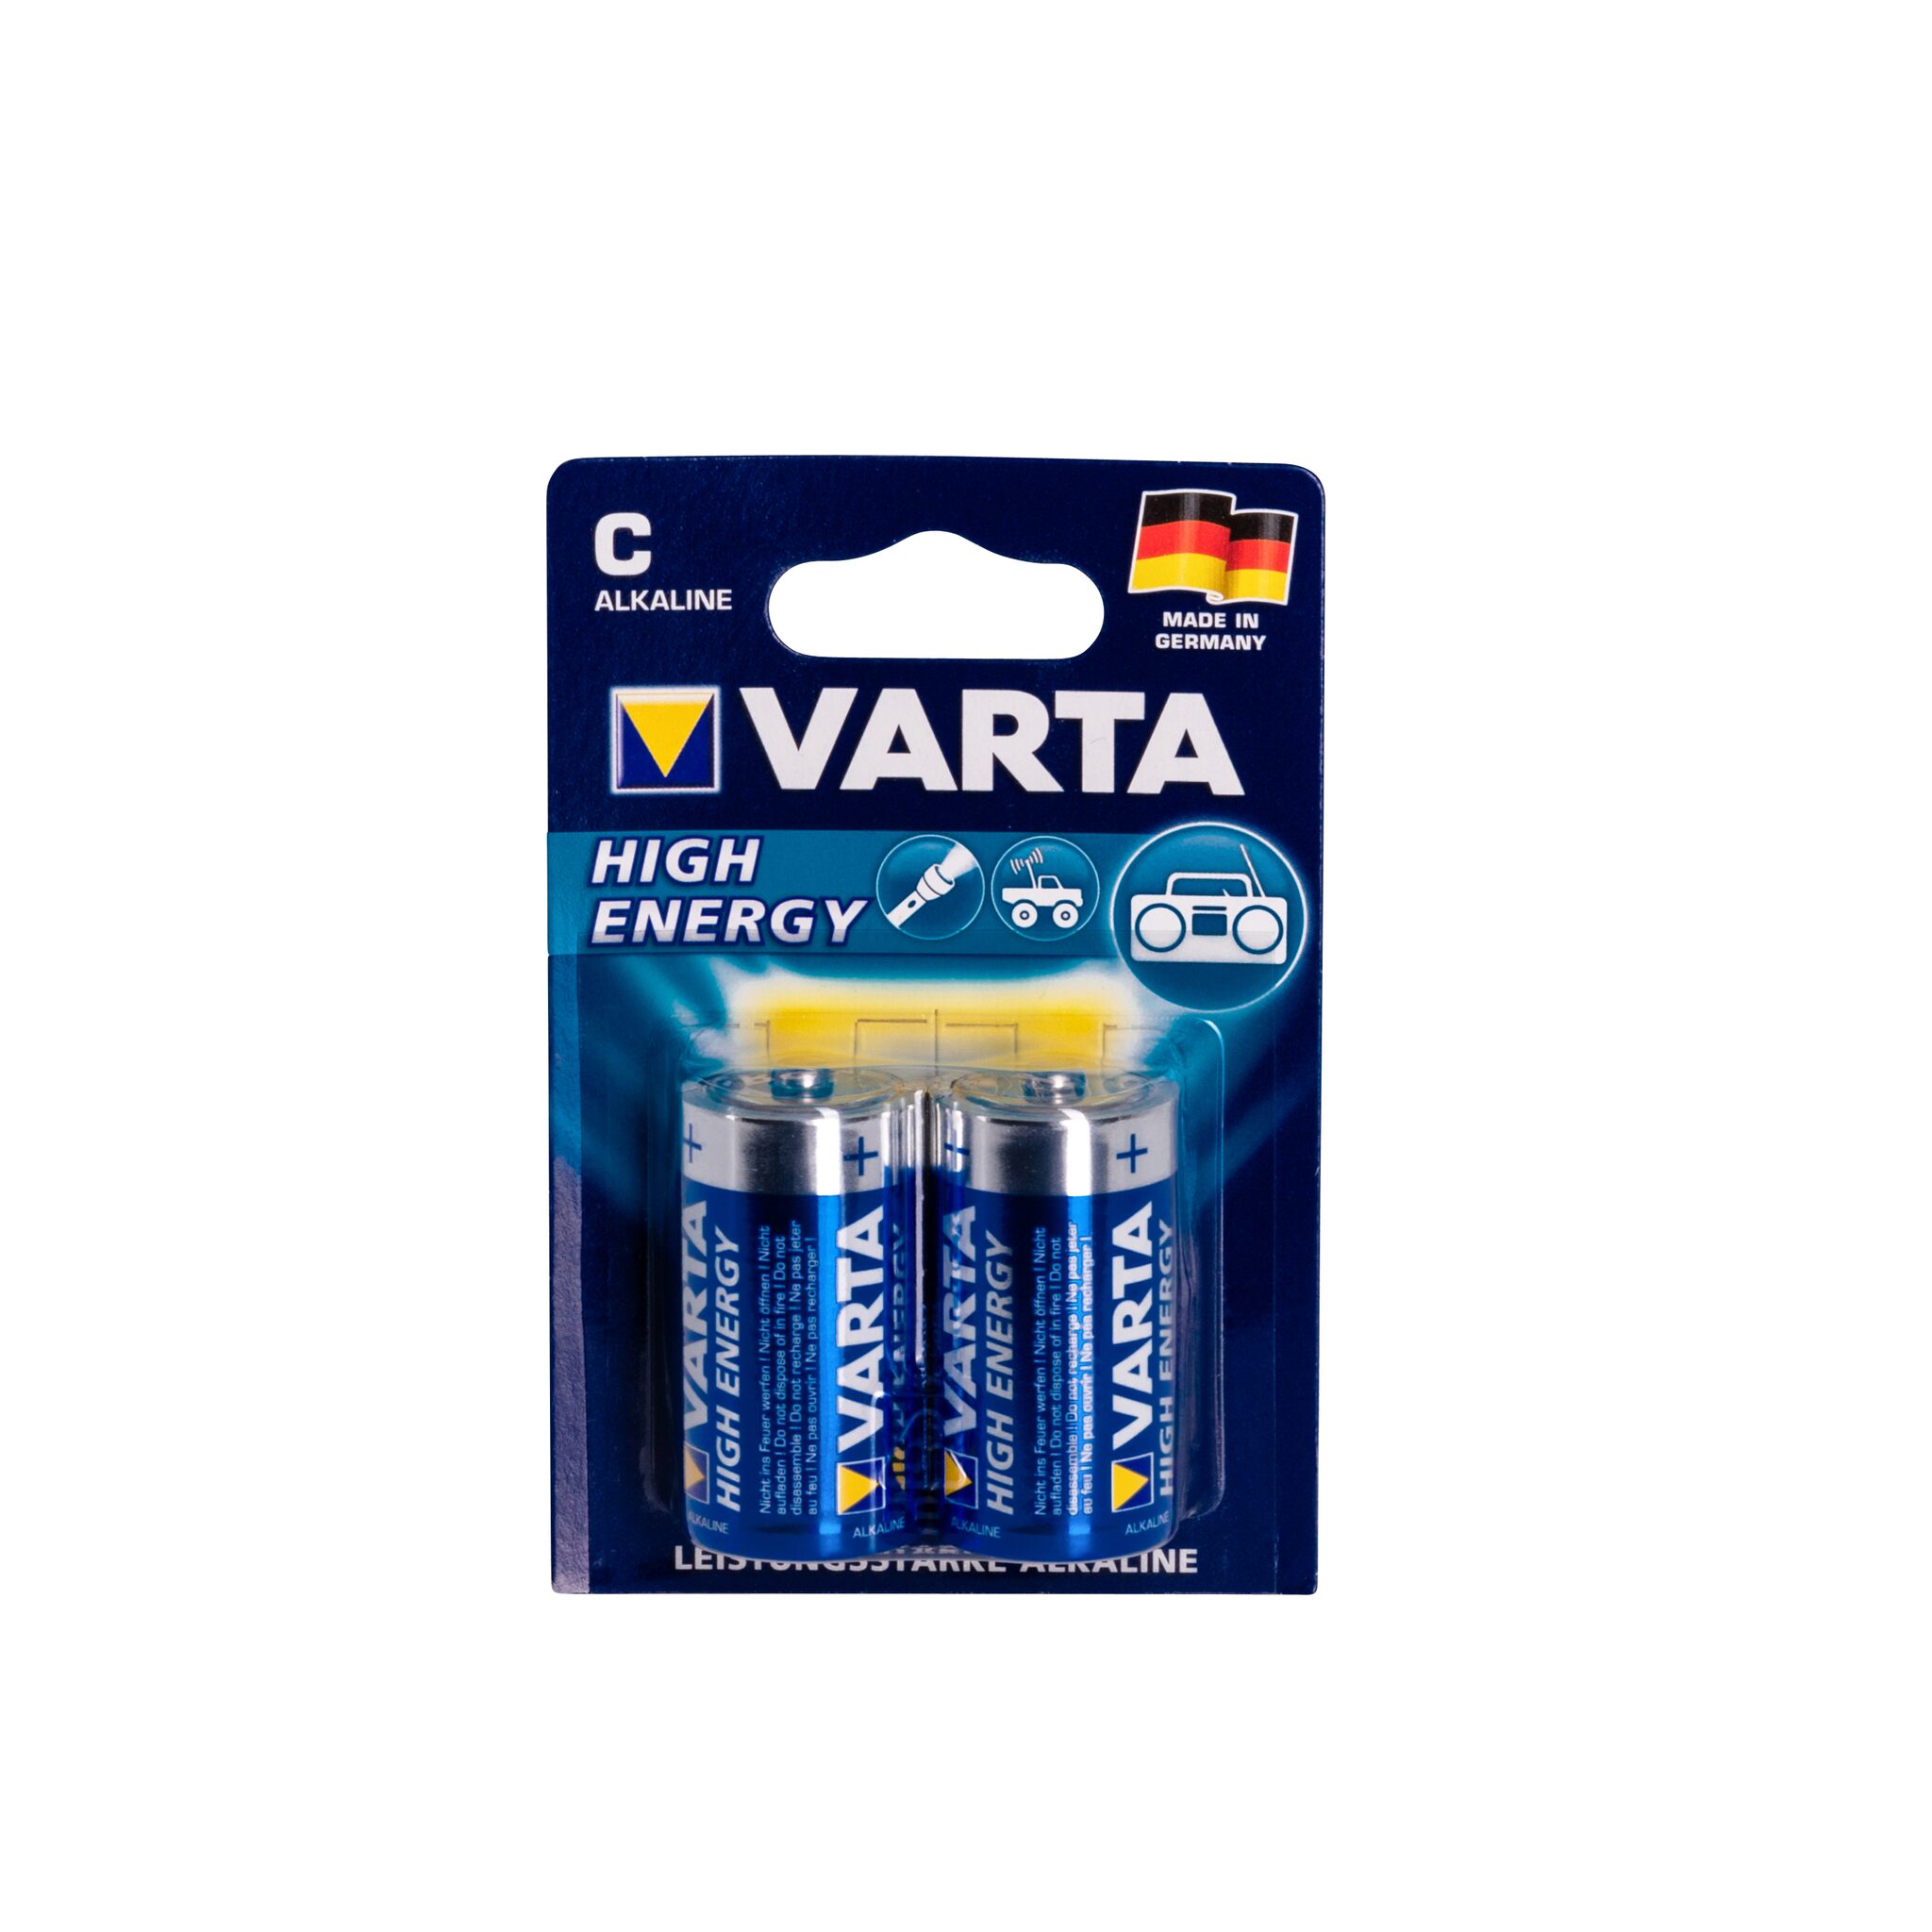 VARTA High Energy Alkaline Battery Type C, Baby